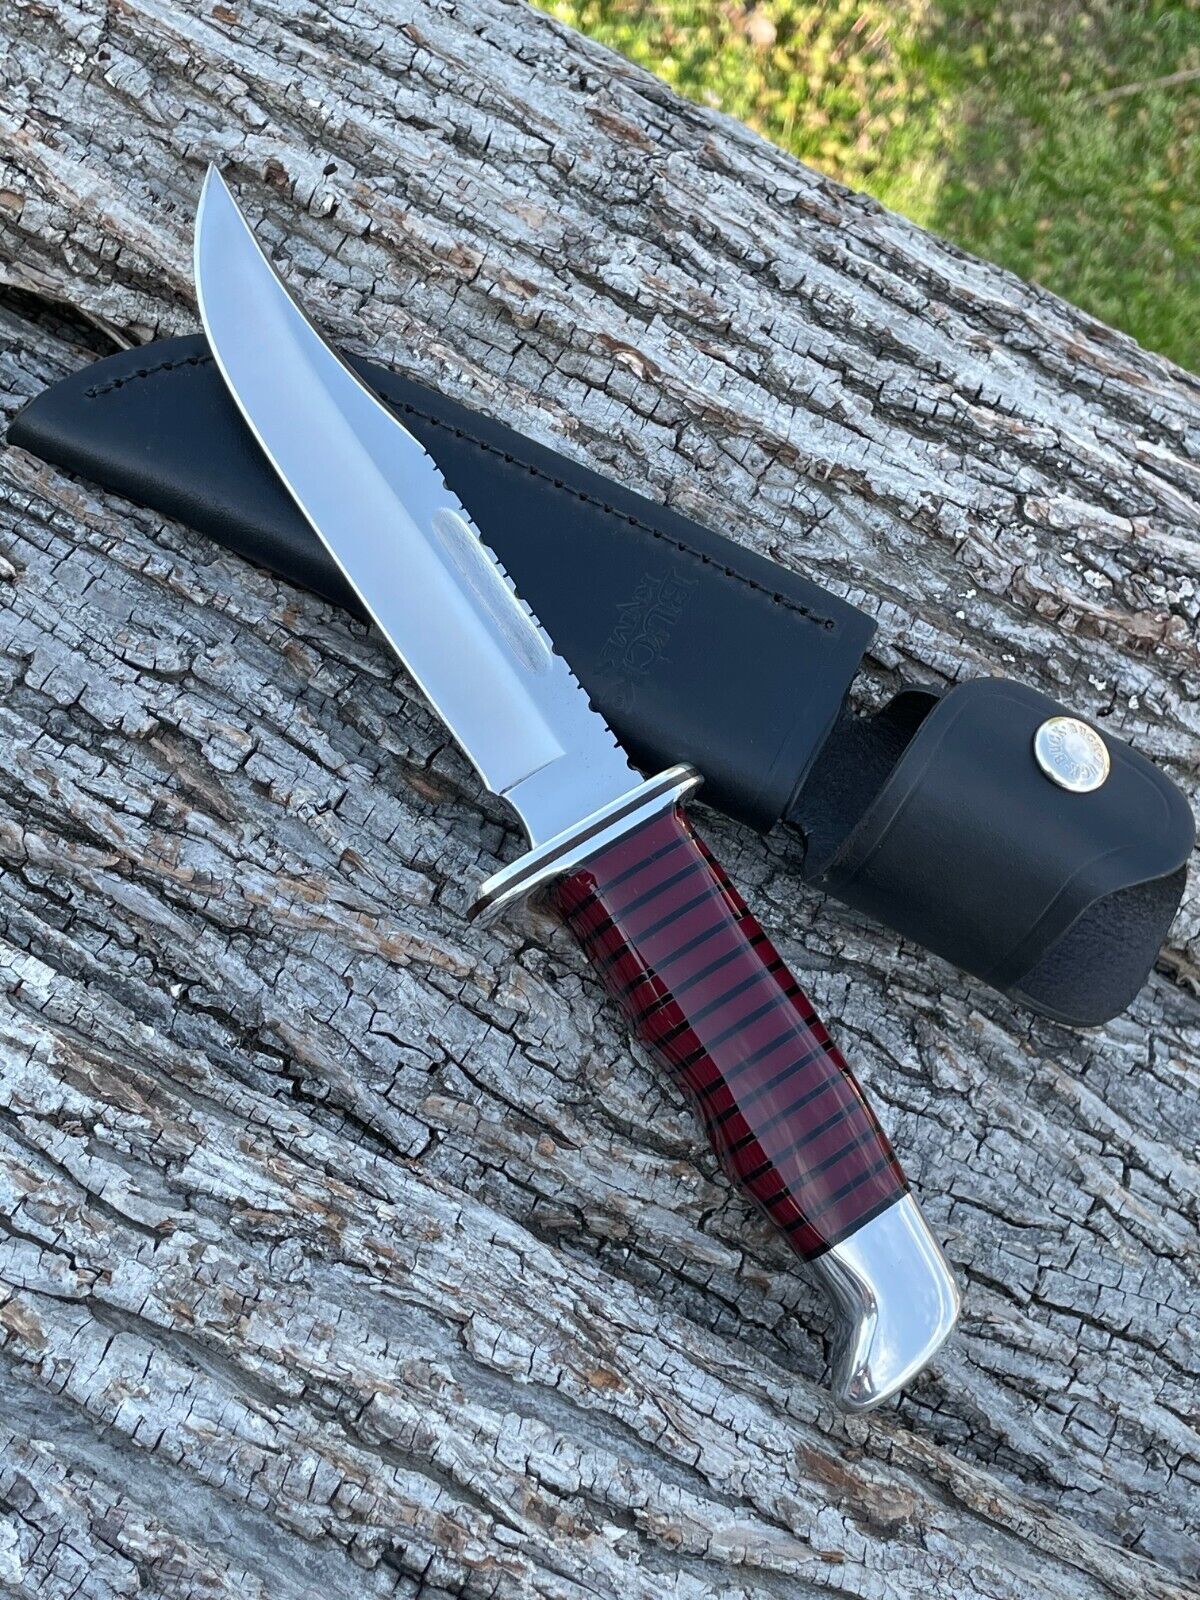 BUCK 119 CUSTOM LEROY REMER RED & BLACK FIXED BLADE KNIFE KNIVES SHEATH